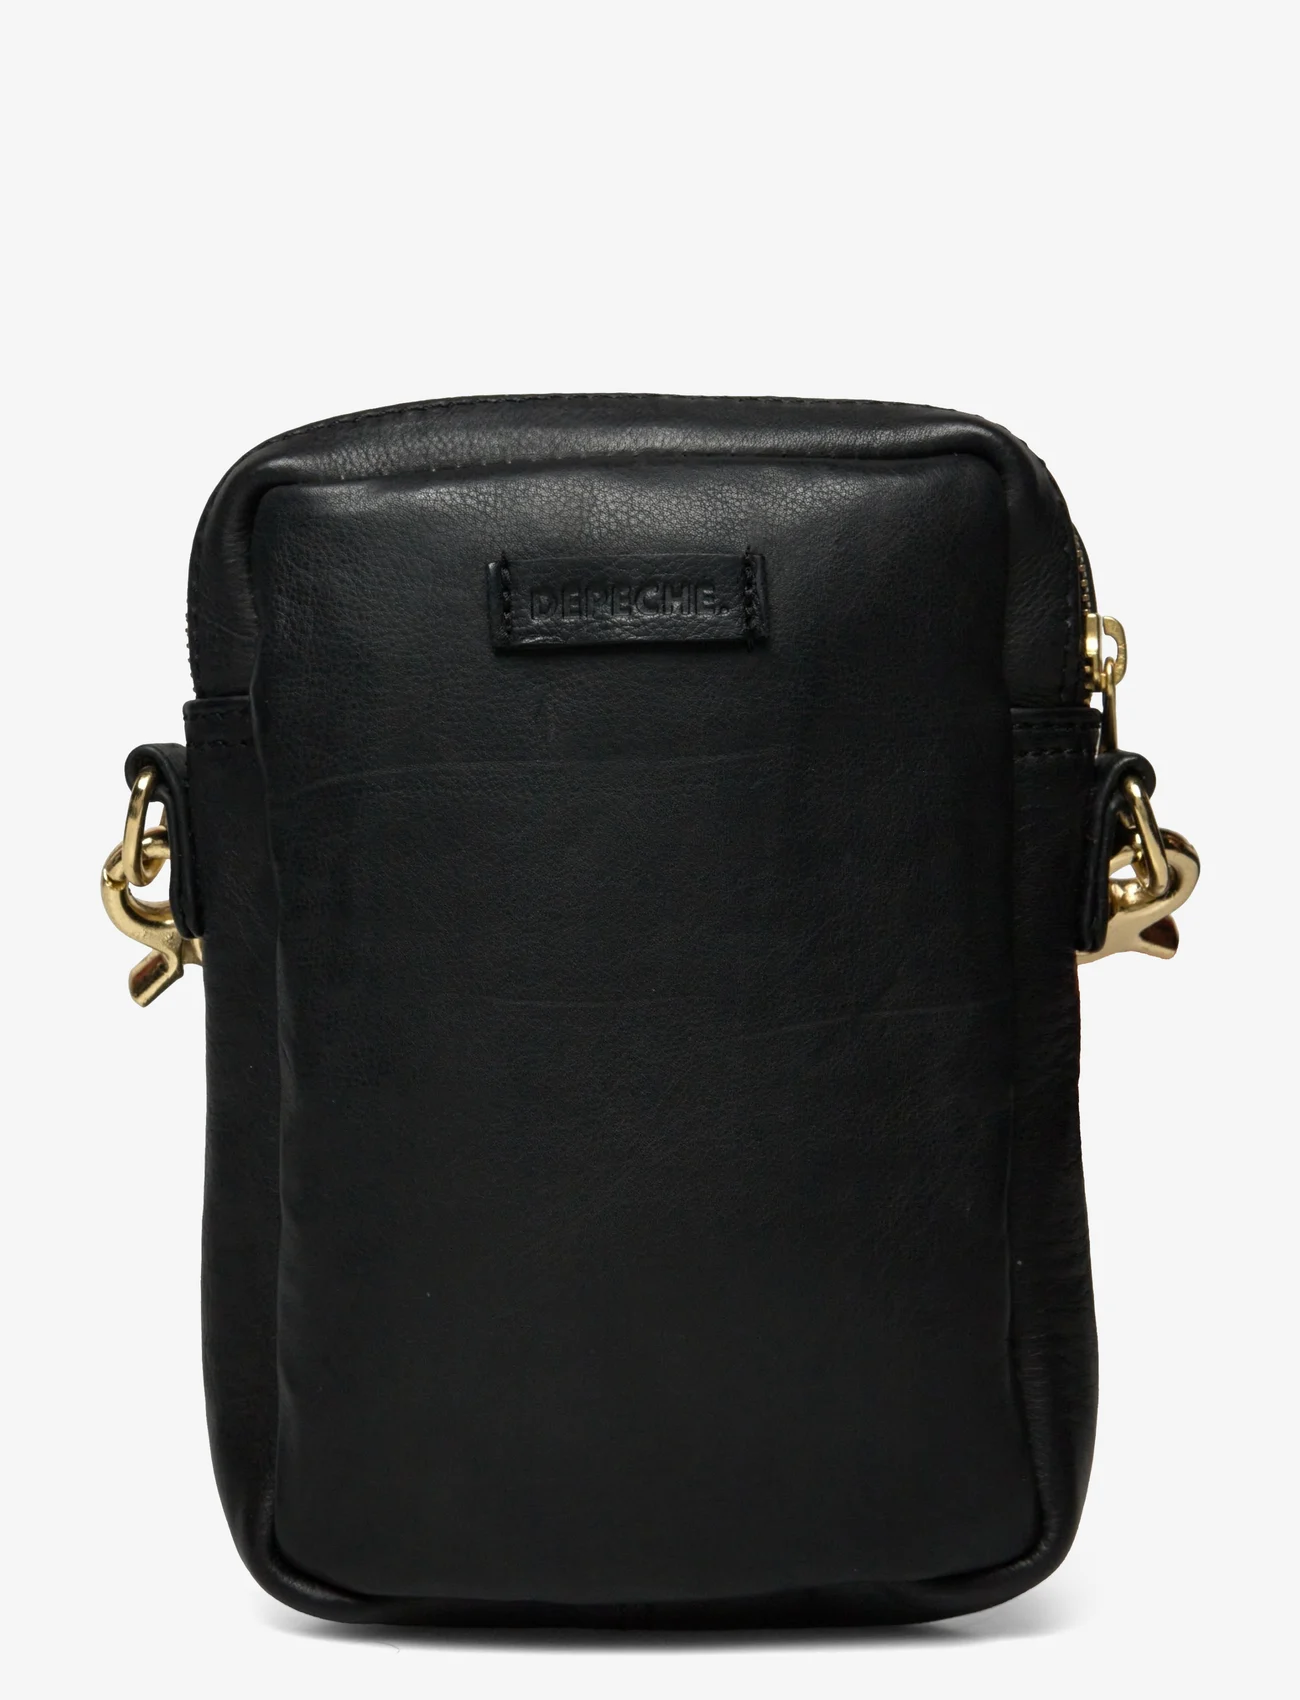 DEPECHE - Mobile bag - birthday gifts - 099 black (nero) - 1